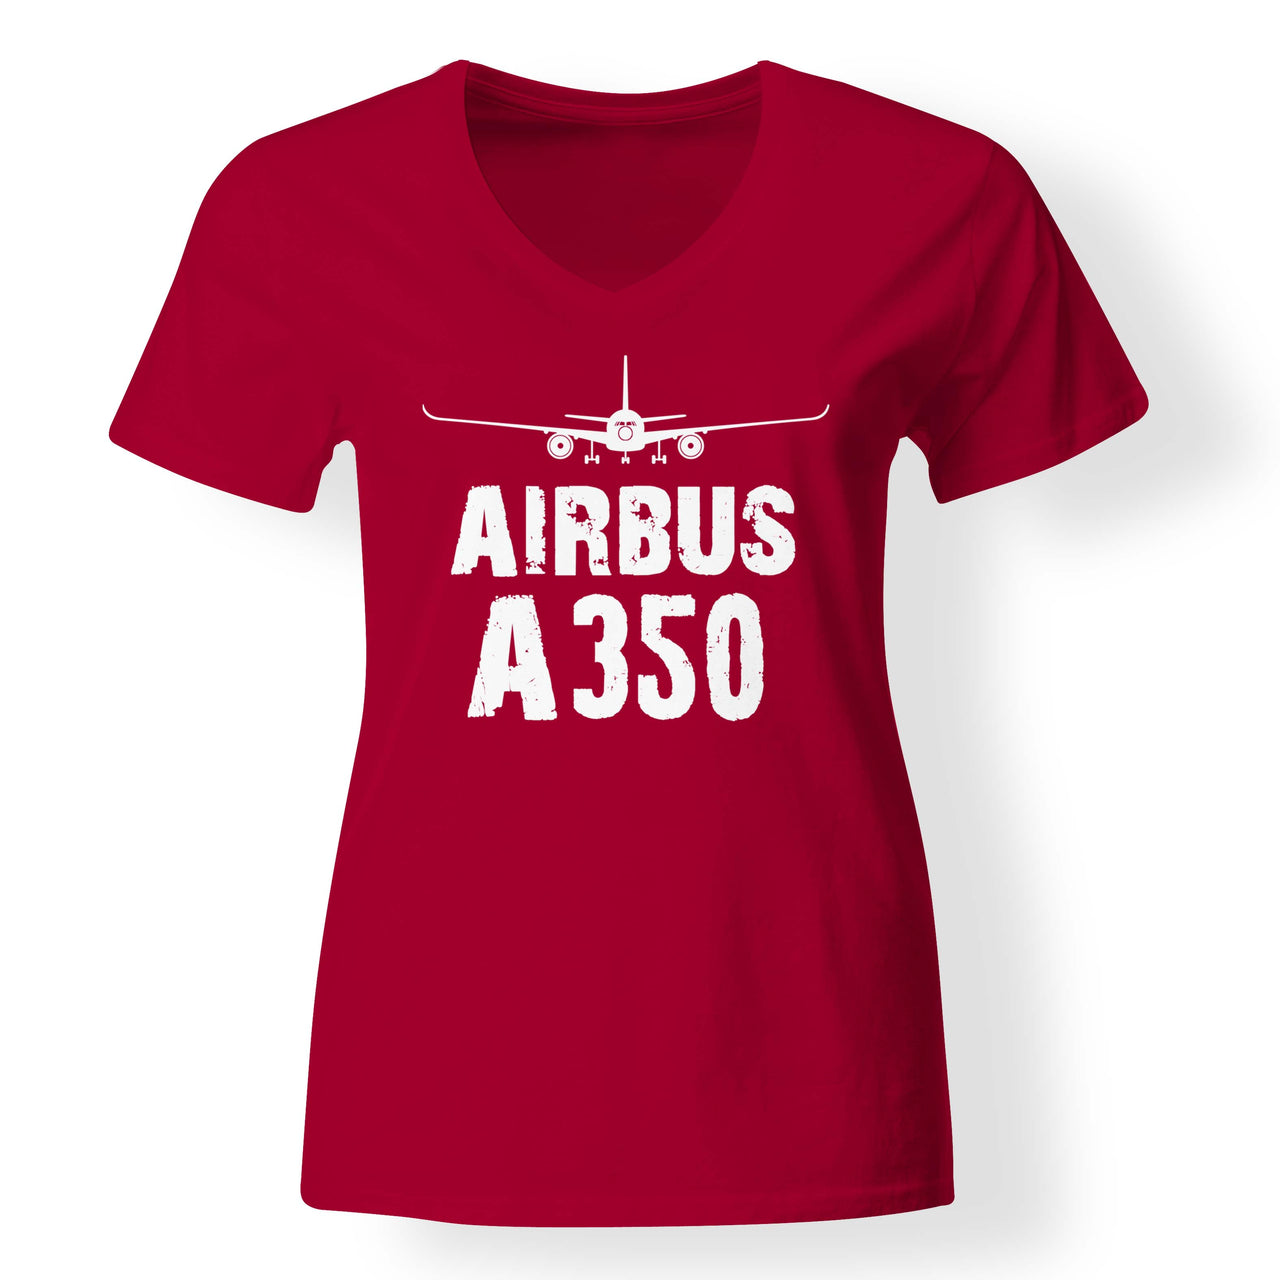 Airbus A350 & Plane Designed V-Neck T-Shirts